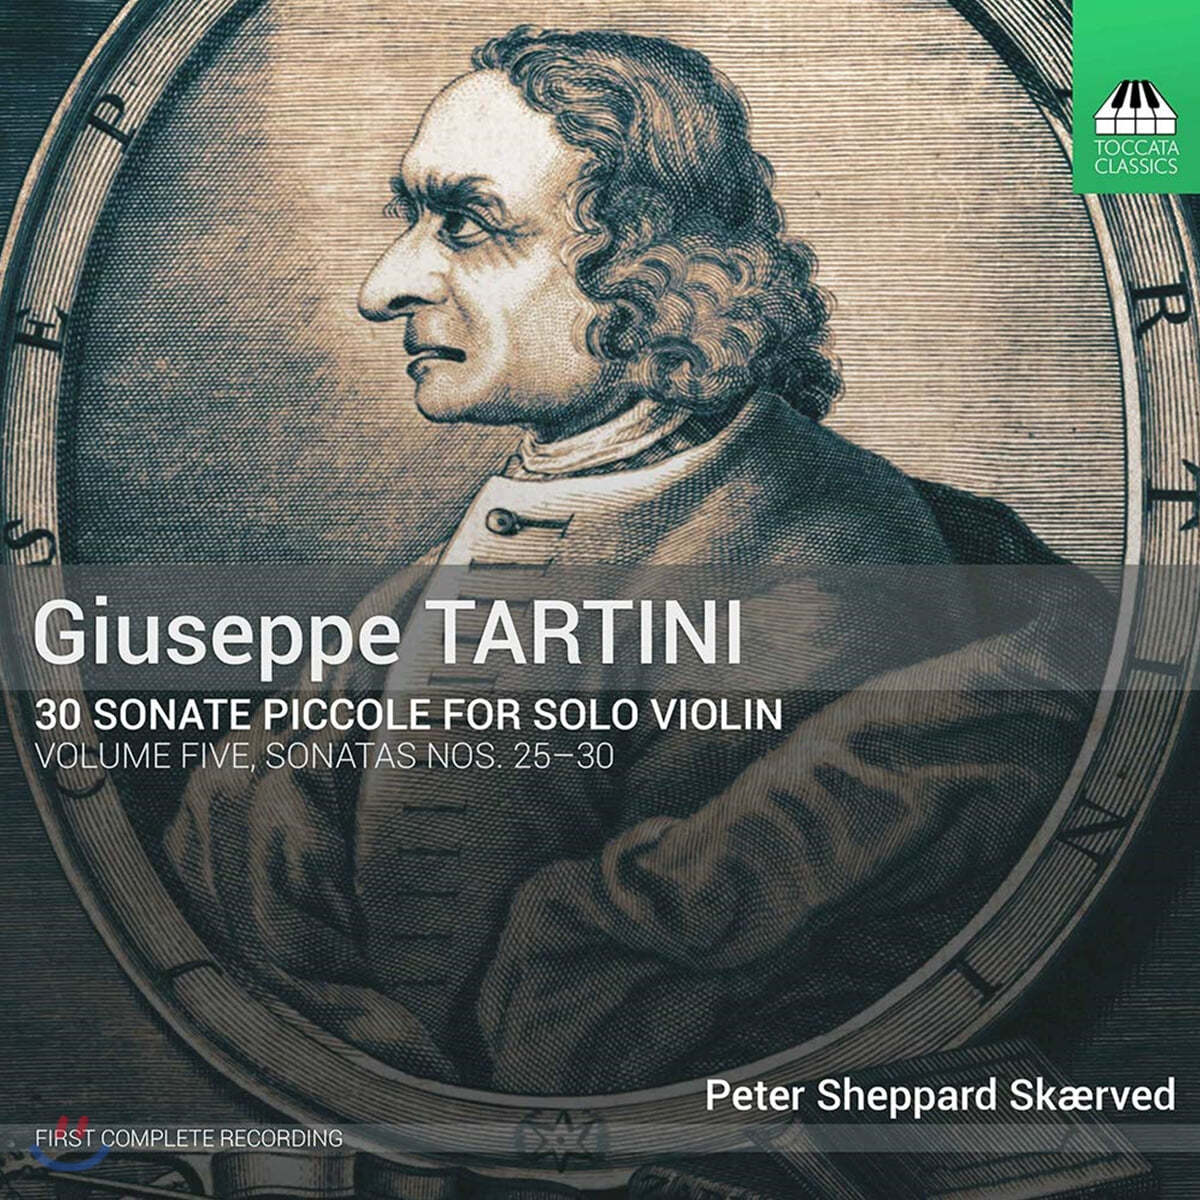 Peter Sheppard Skaerved 주세페 타르티니: 무반주 바이올린 소나타 25-30번 (Tartini: 30 Sonate piccole Vol. 5)